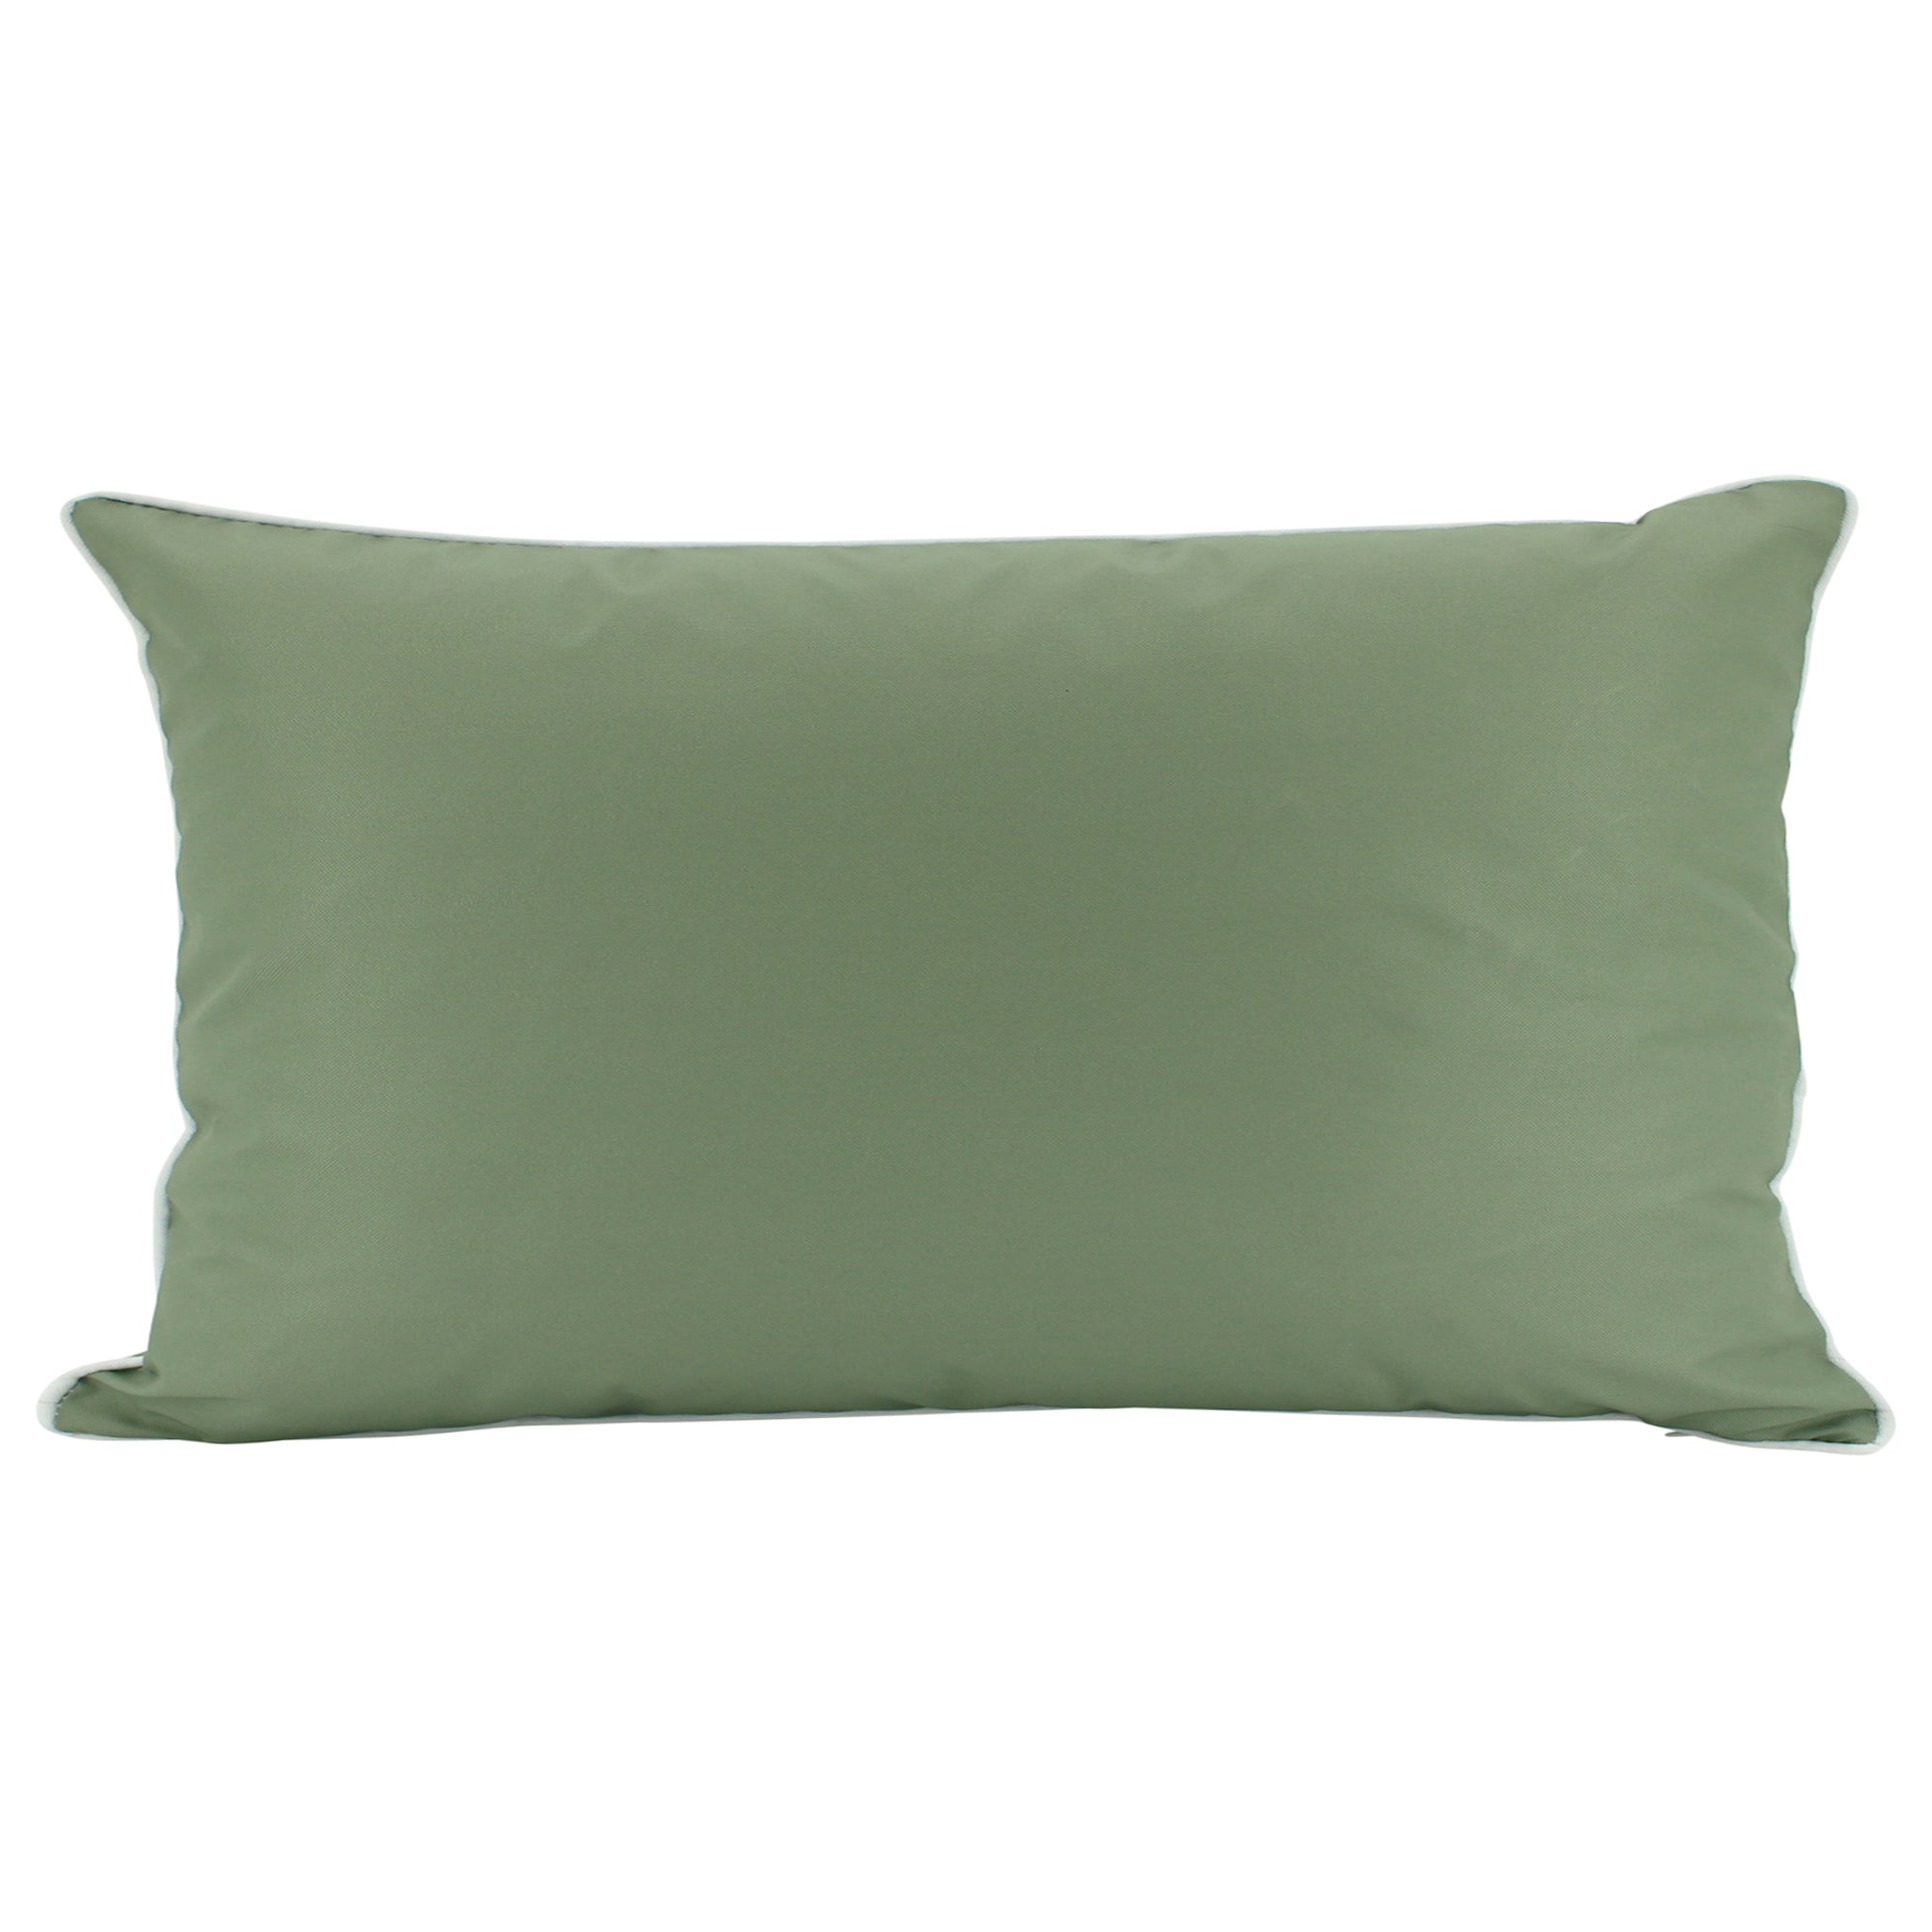 Outdoor Olive Lumbar Cushion - 30cm x 50cm